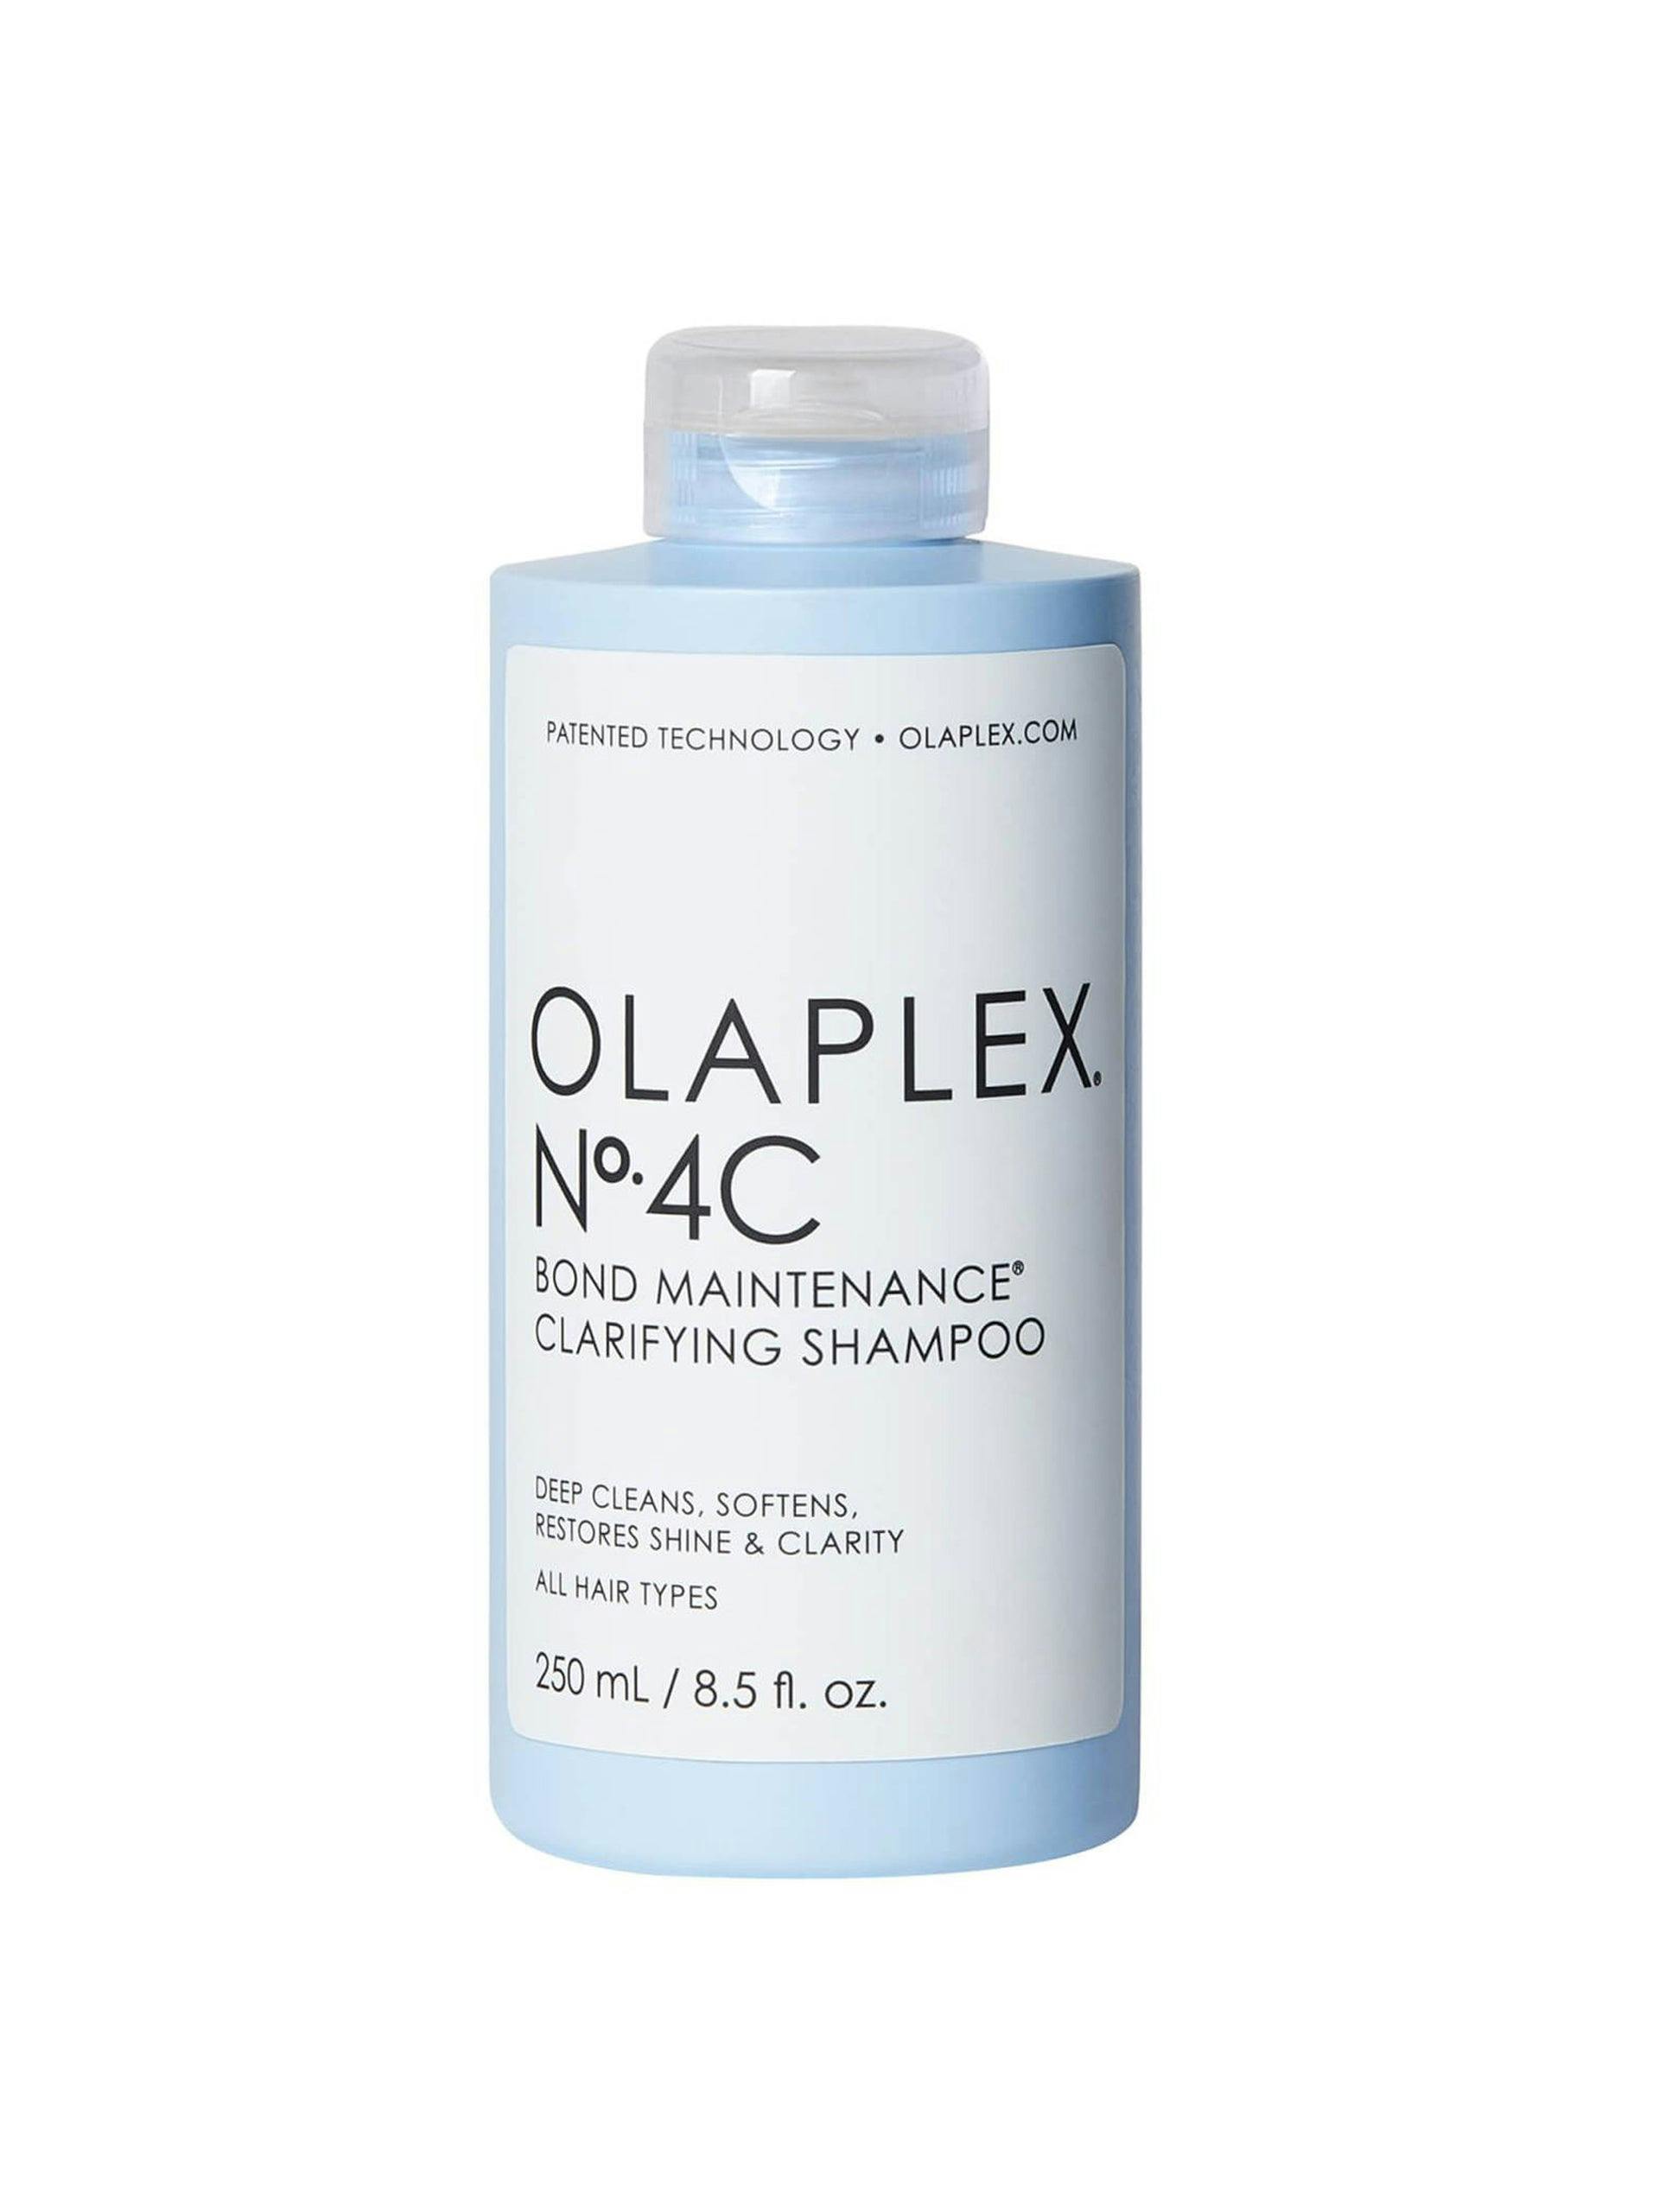 Bond Maintenance® clarifying shampoo